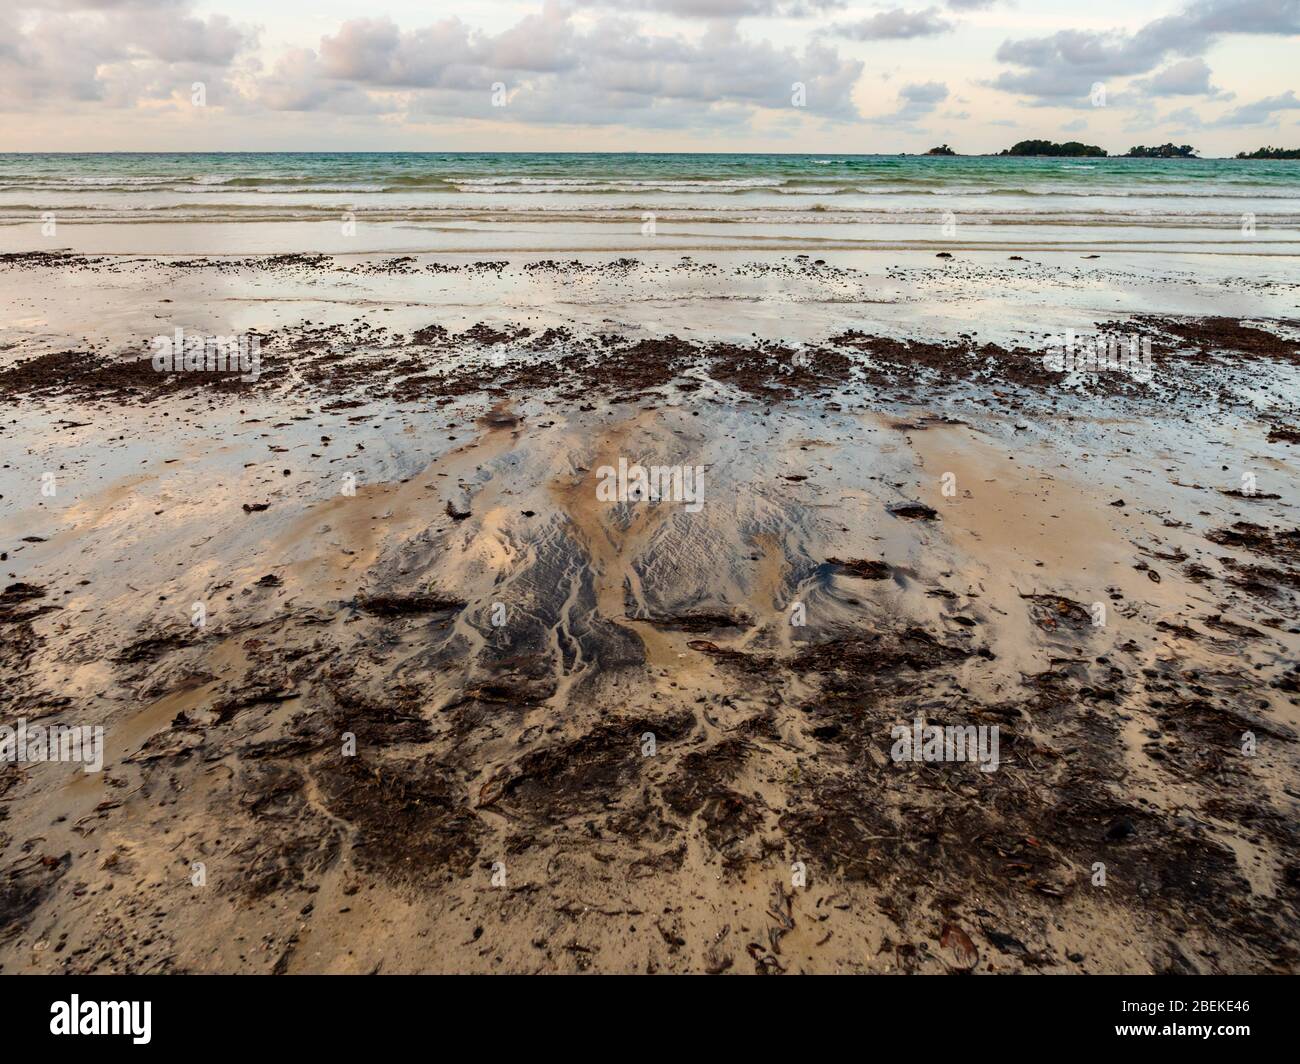 BINTAN, INDONESIA – 7 MAR 2020 – Tar balls and oil sludge from marine oil spills wash up on Lagoi beach causing environmental pollution Stock Photo